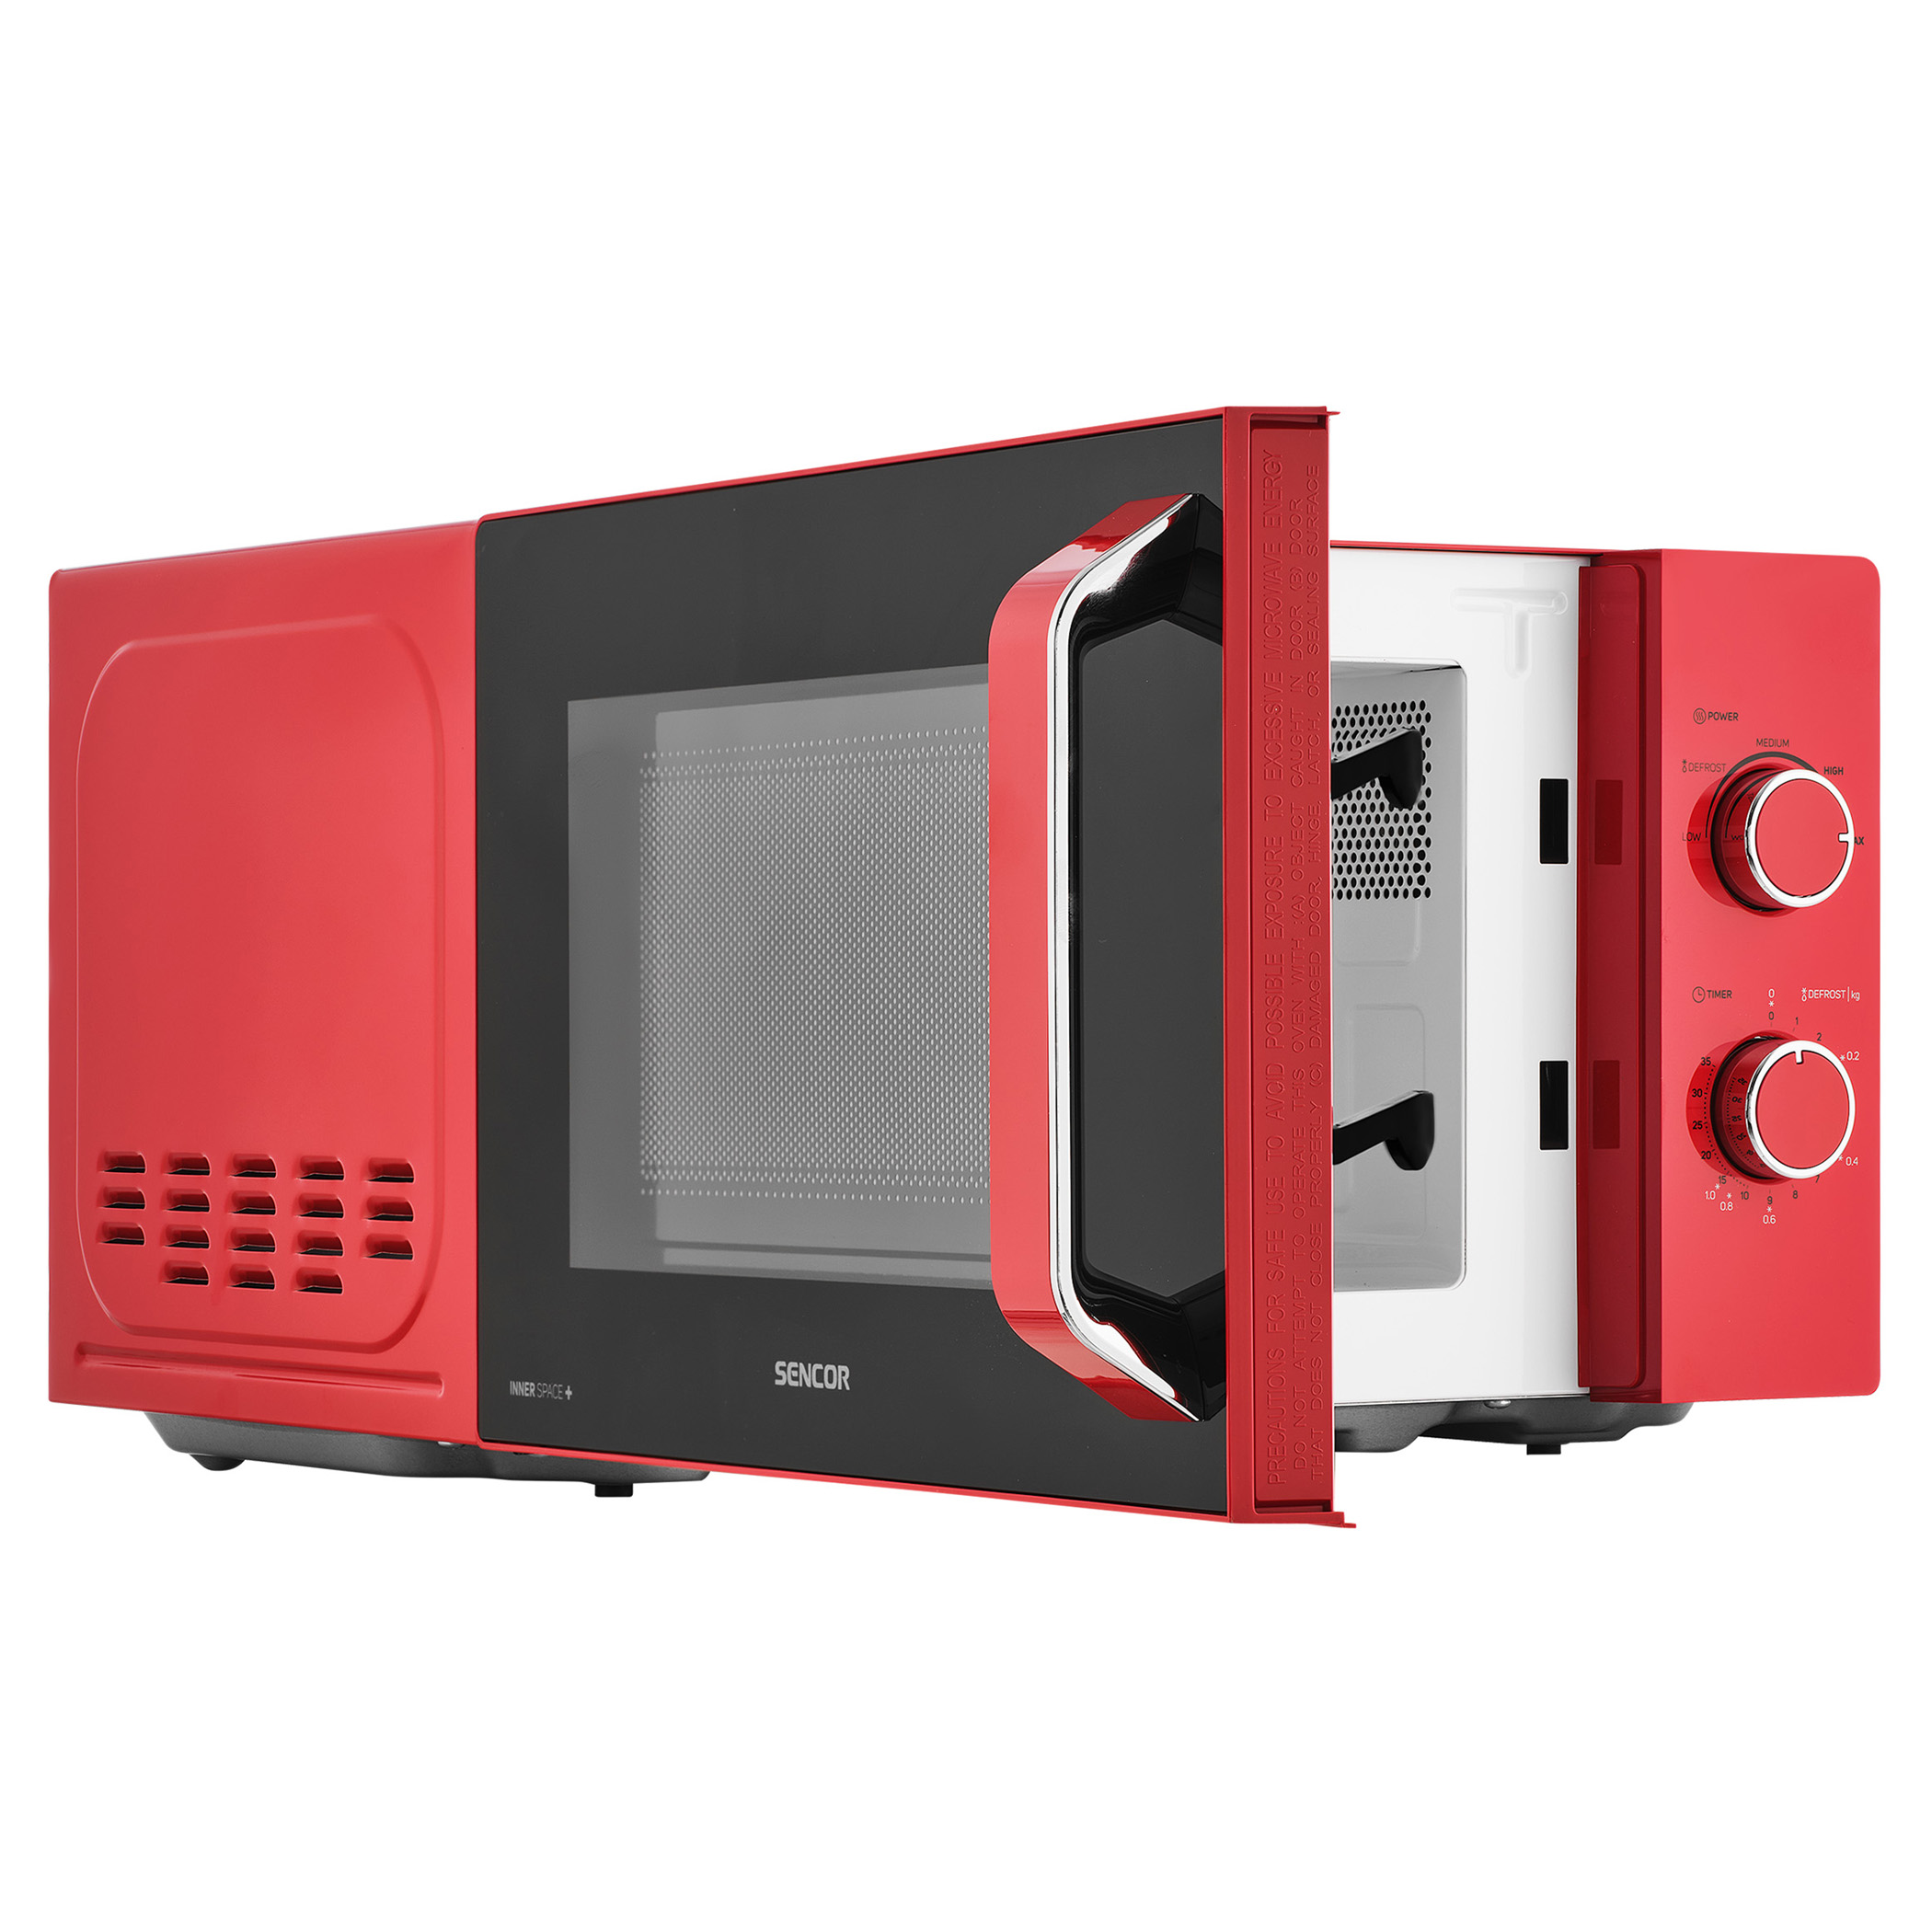 20l Electric Portable Mini Microwave Oven - Buy 20l Electric Portable Mini  Microwave Oven Product on